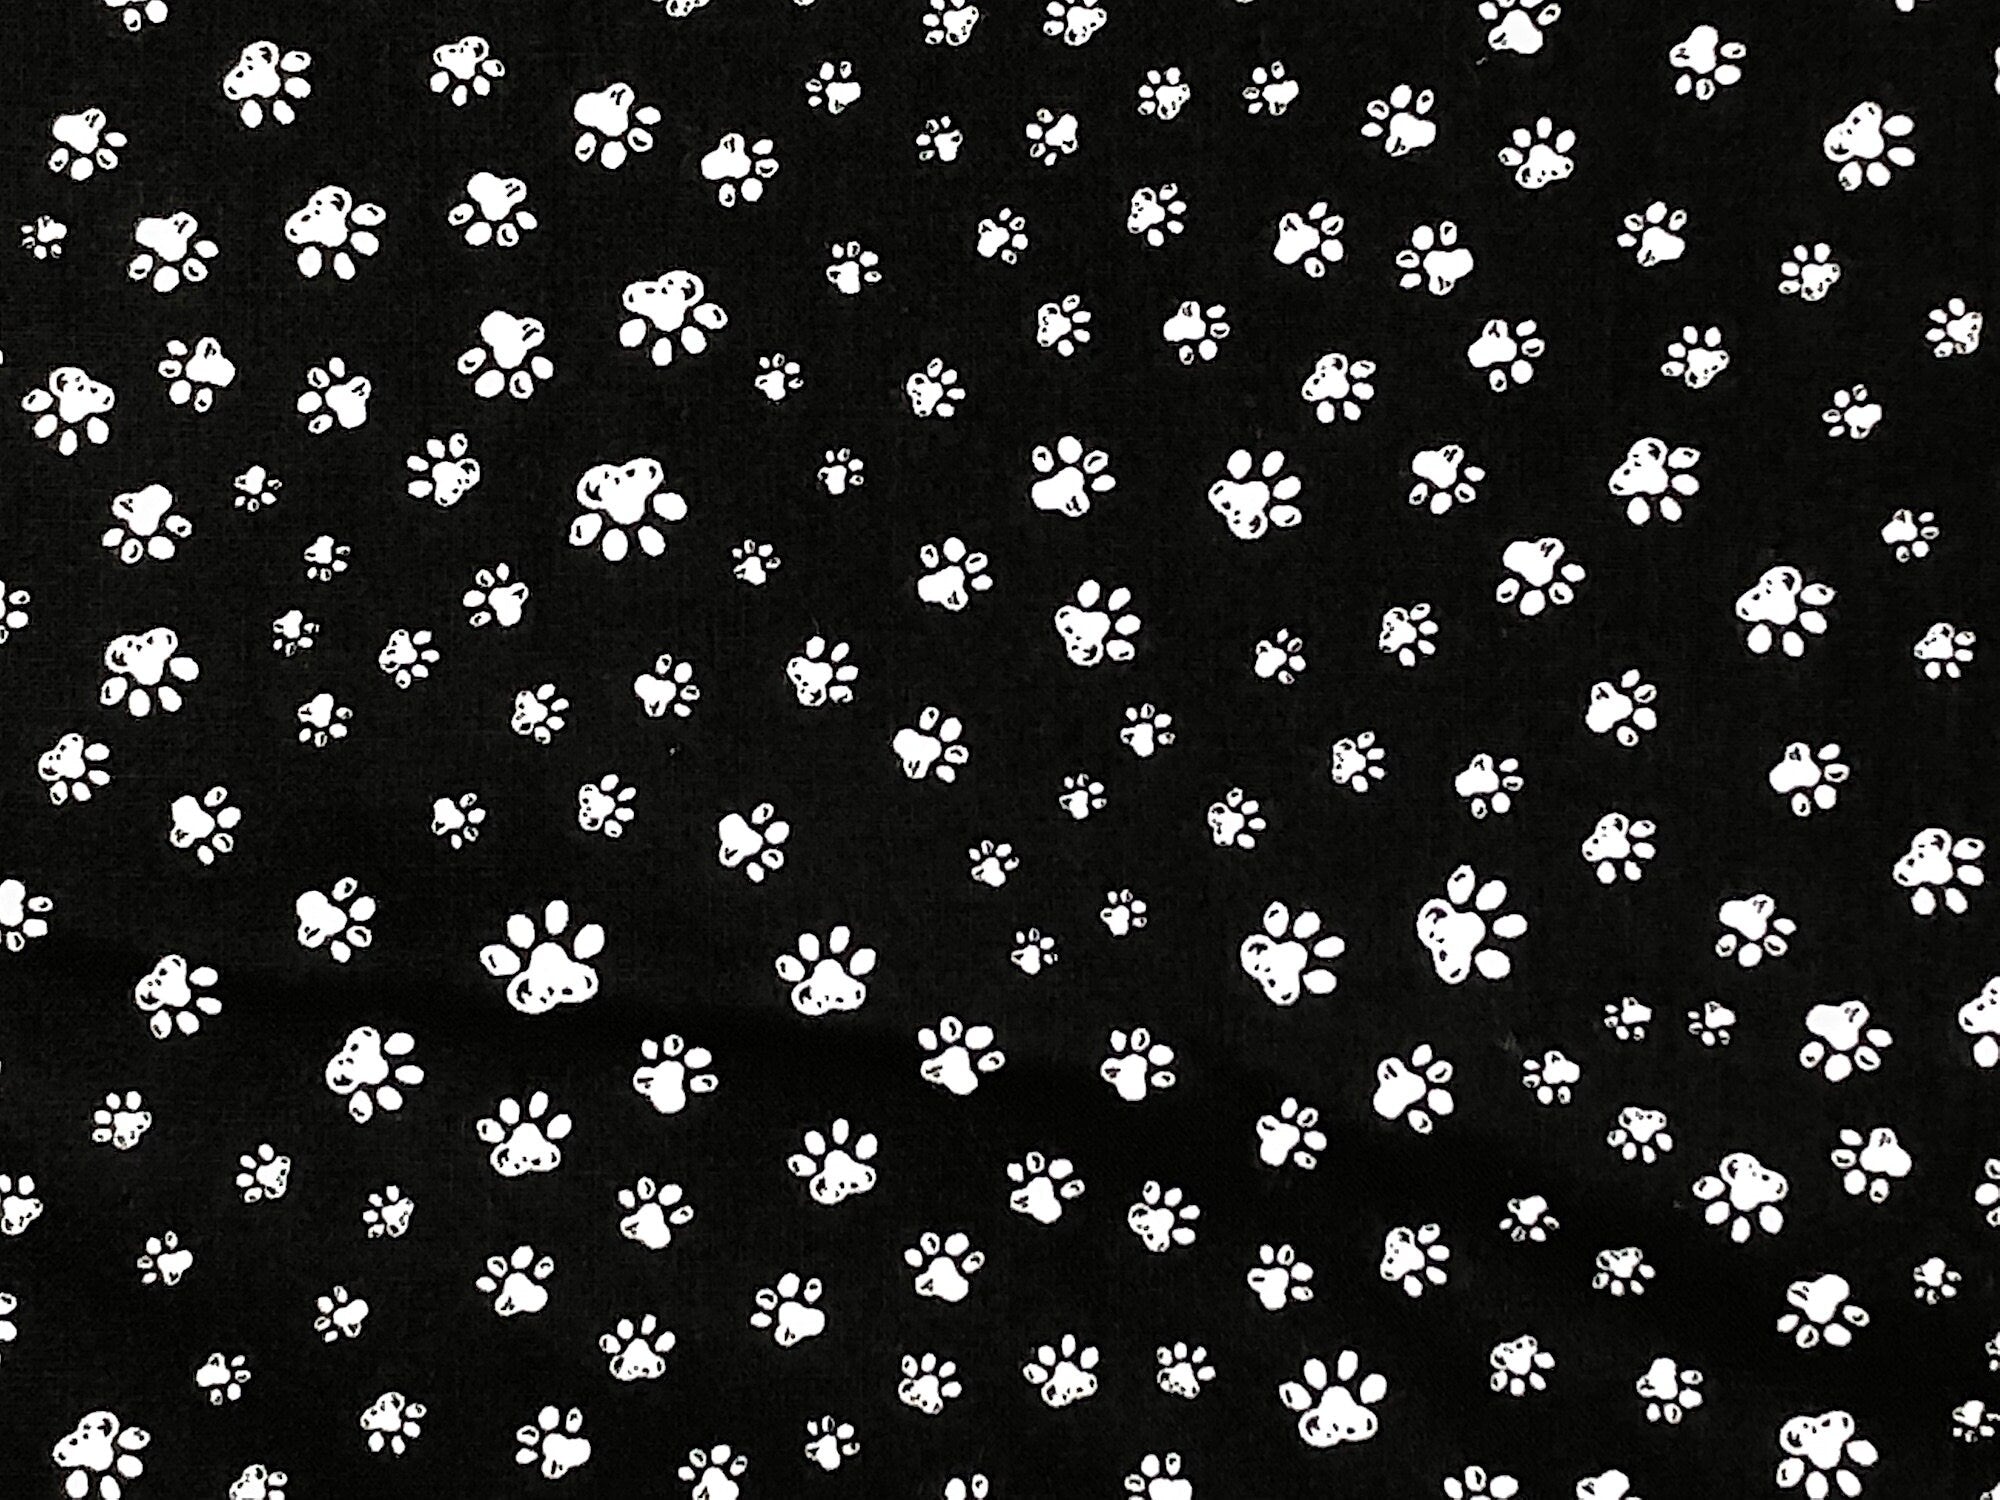 White paw prints on a black background.